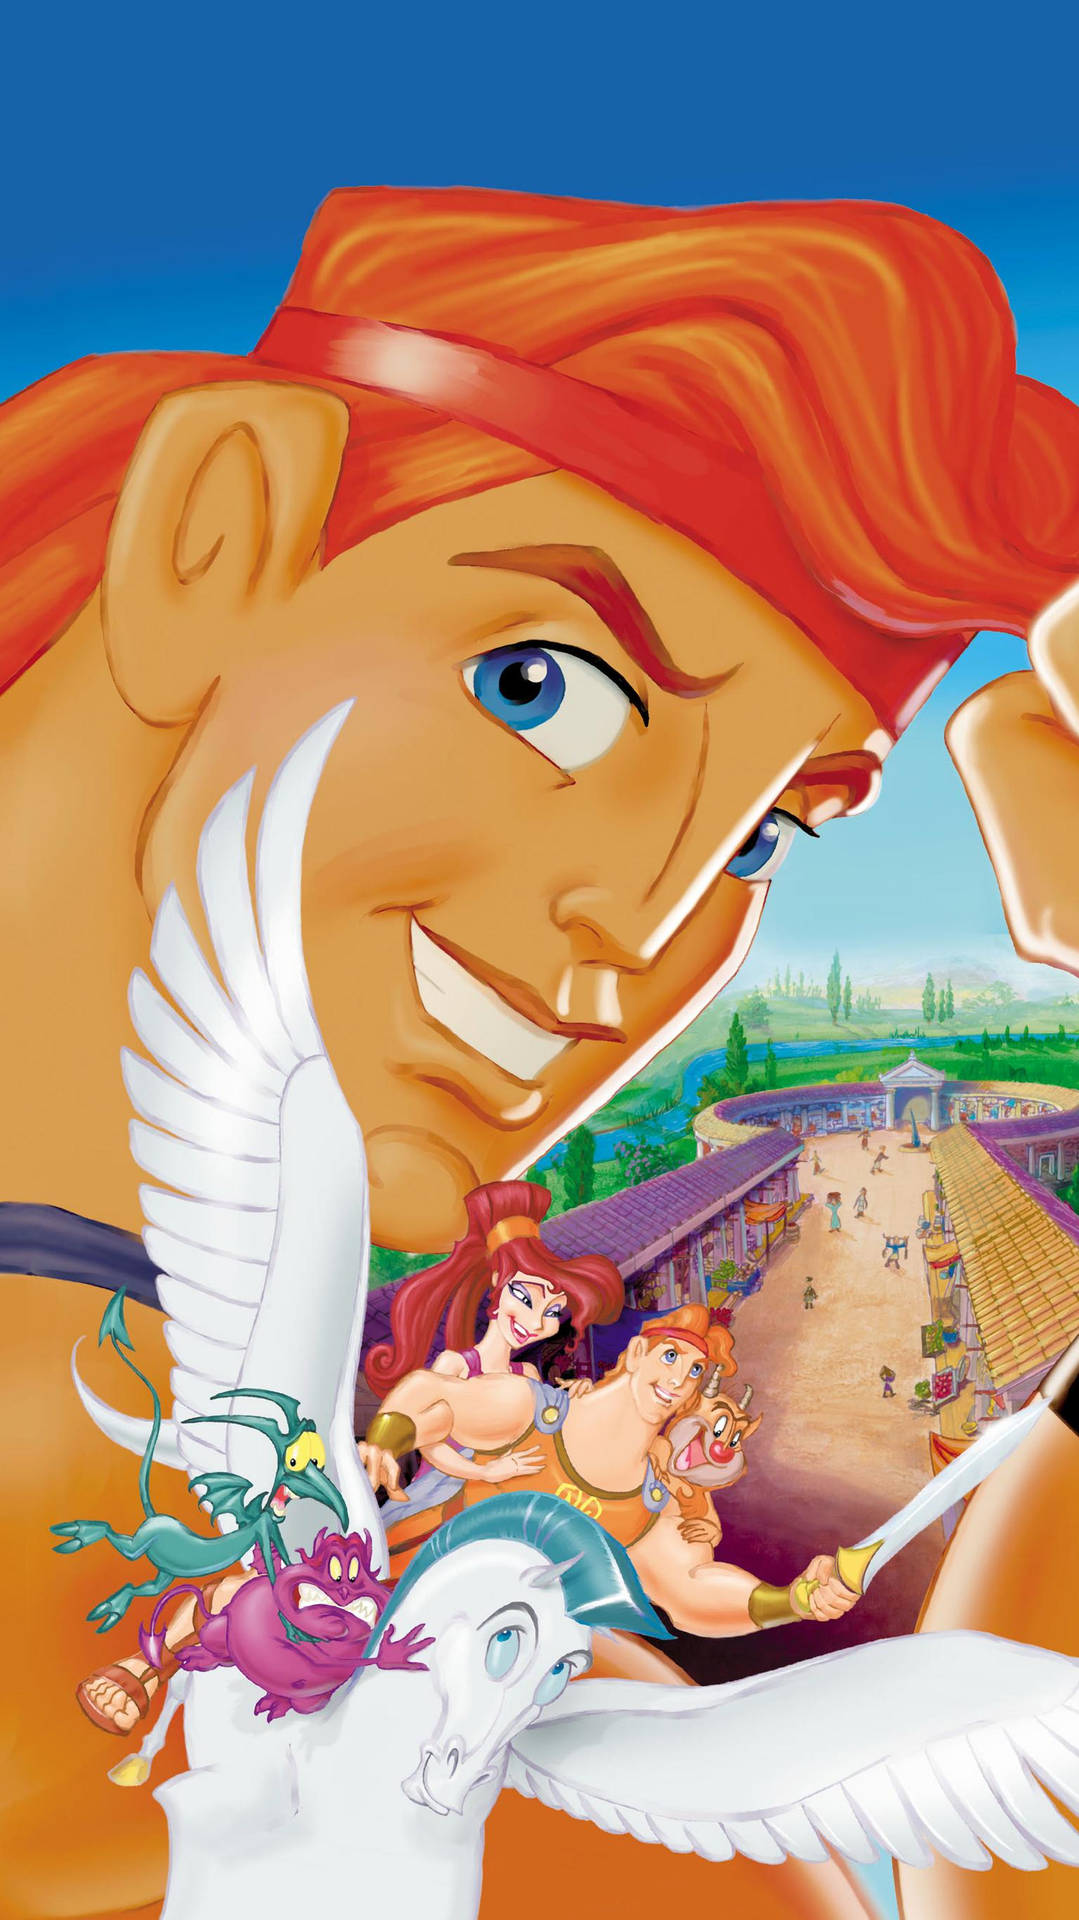 Disney Movie Hercules Poster